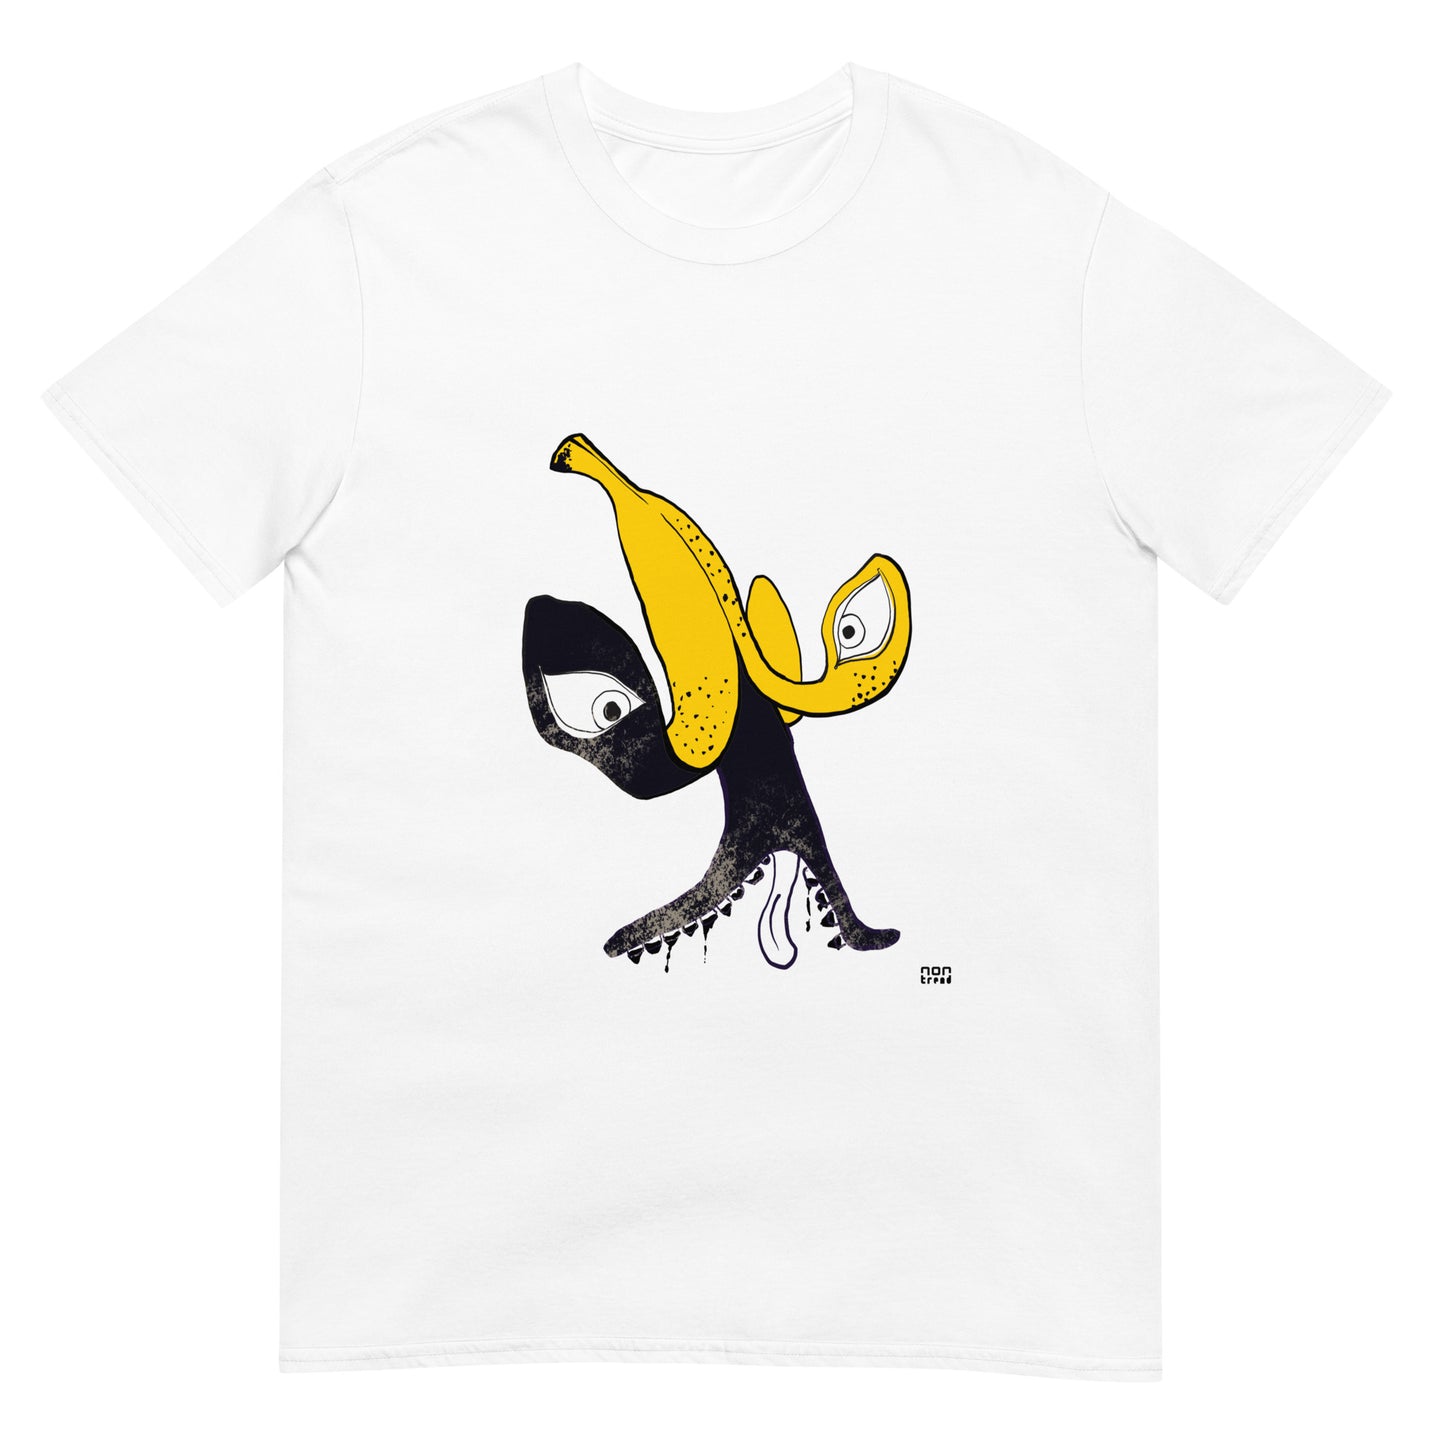 The Banana Face T-shirt